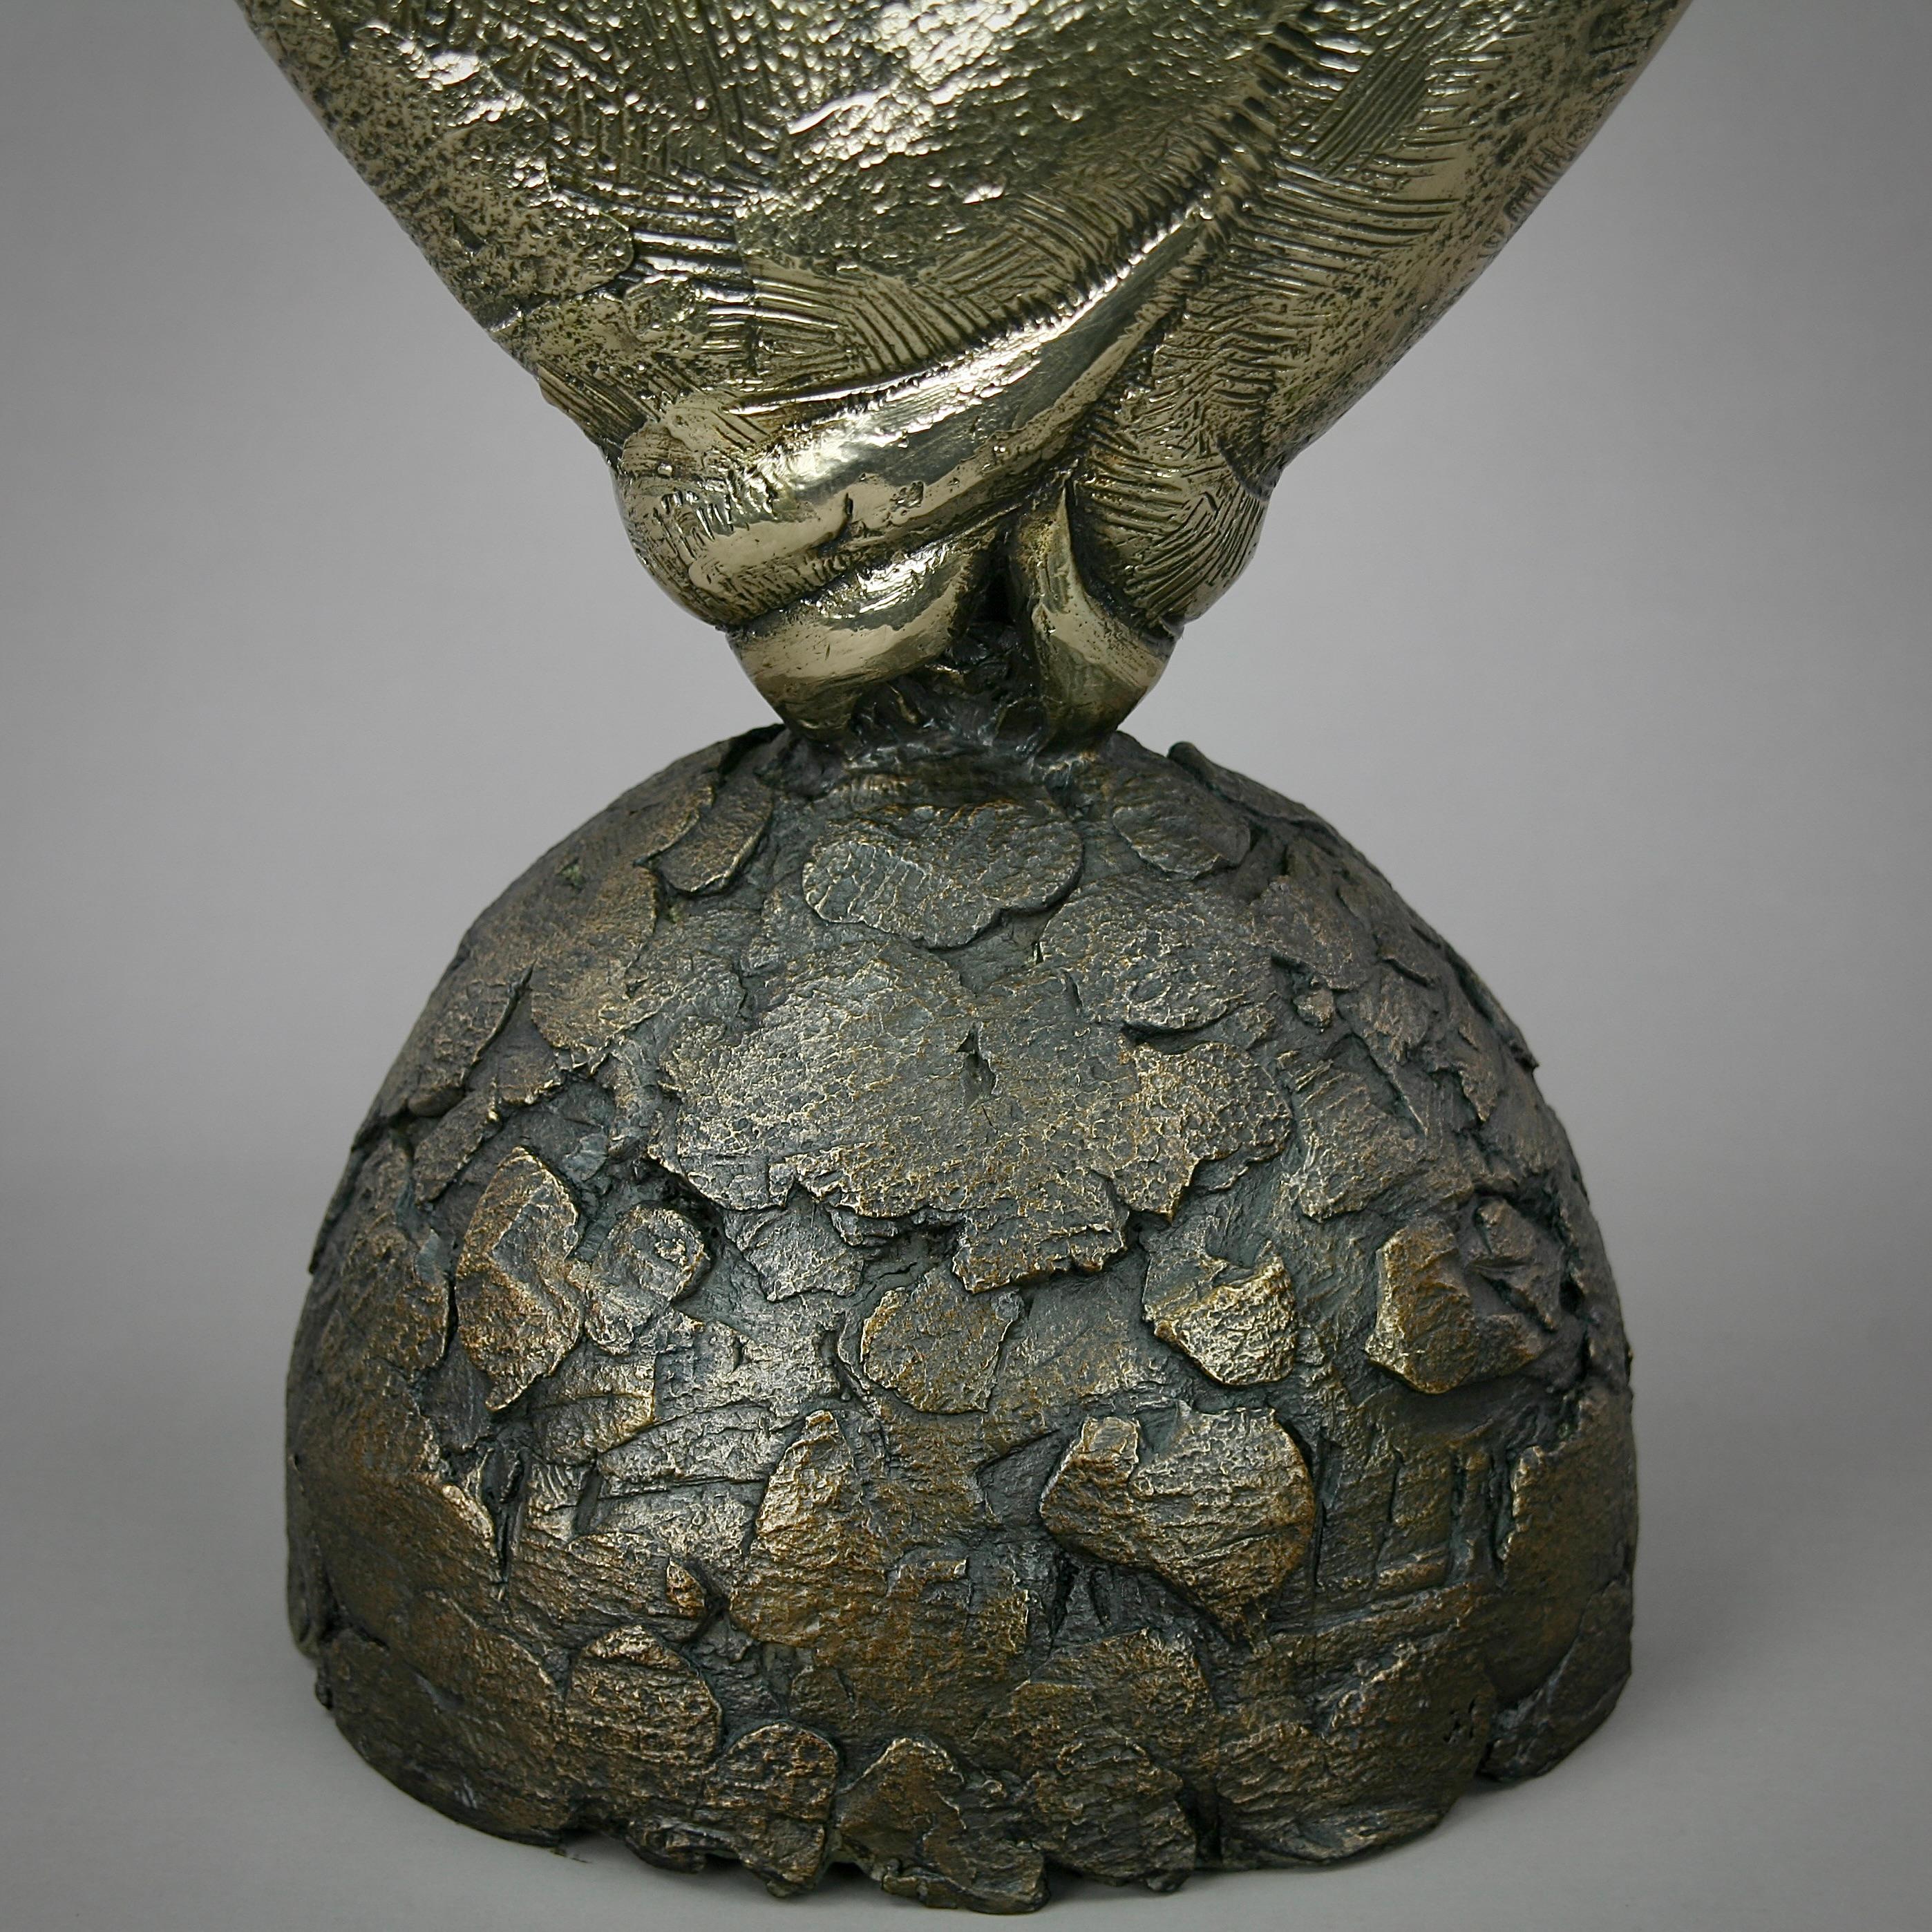 Poisson-tigre Titan - sculpture originale en bronze de la faune marine - Art contemporain - Or Figurative Sculpture par Andrzej Szymczyk